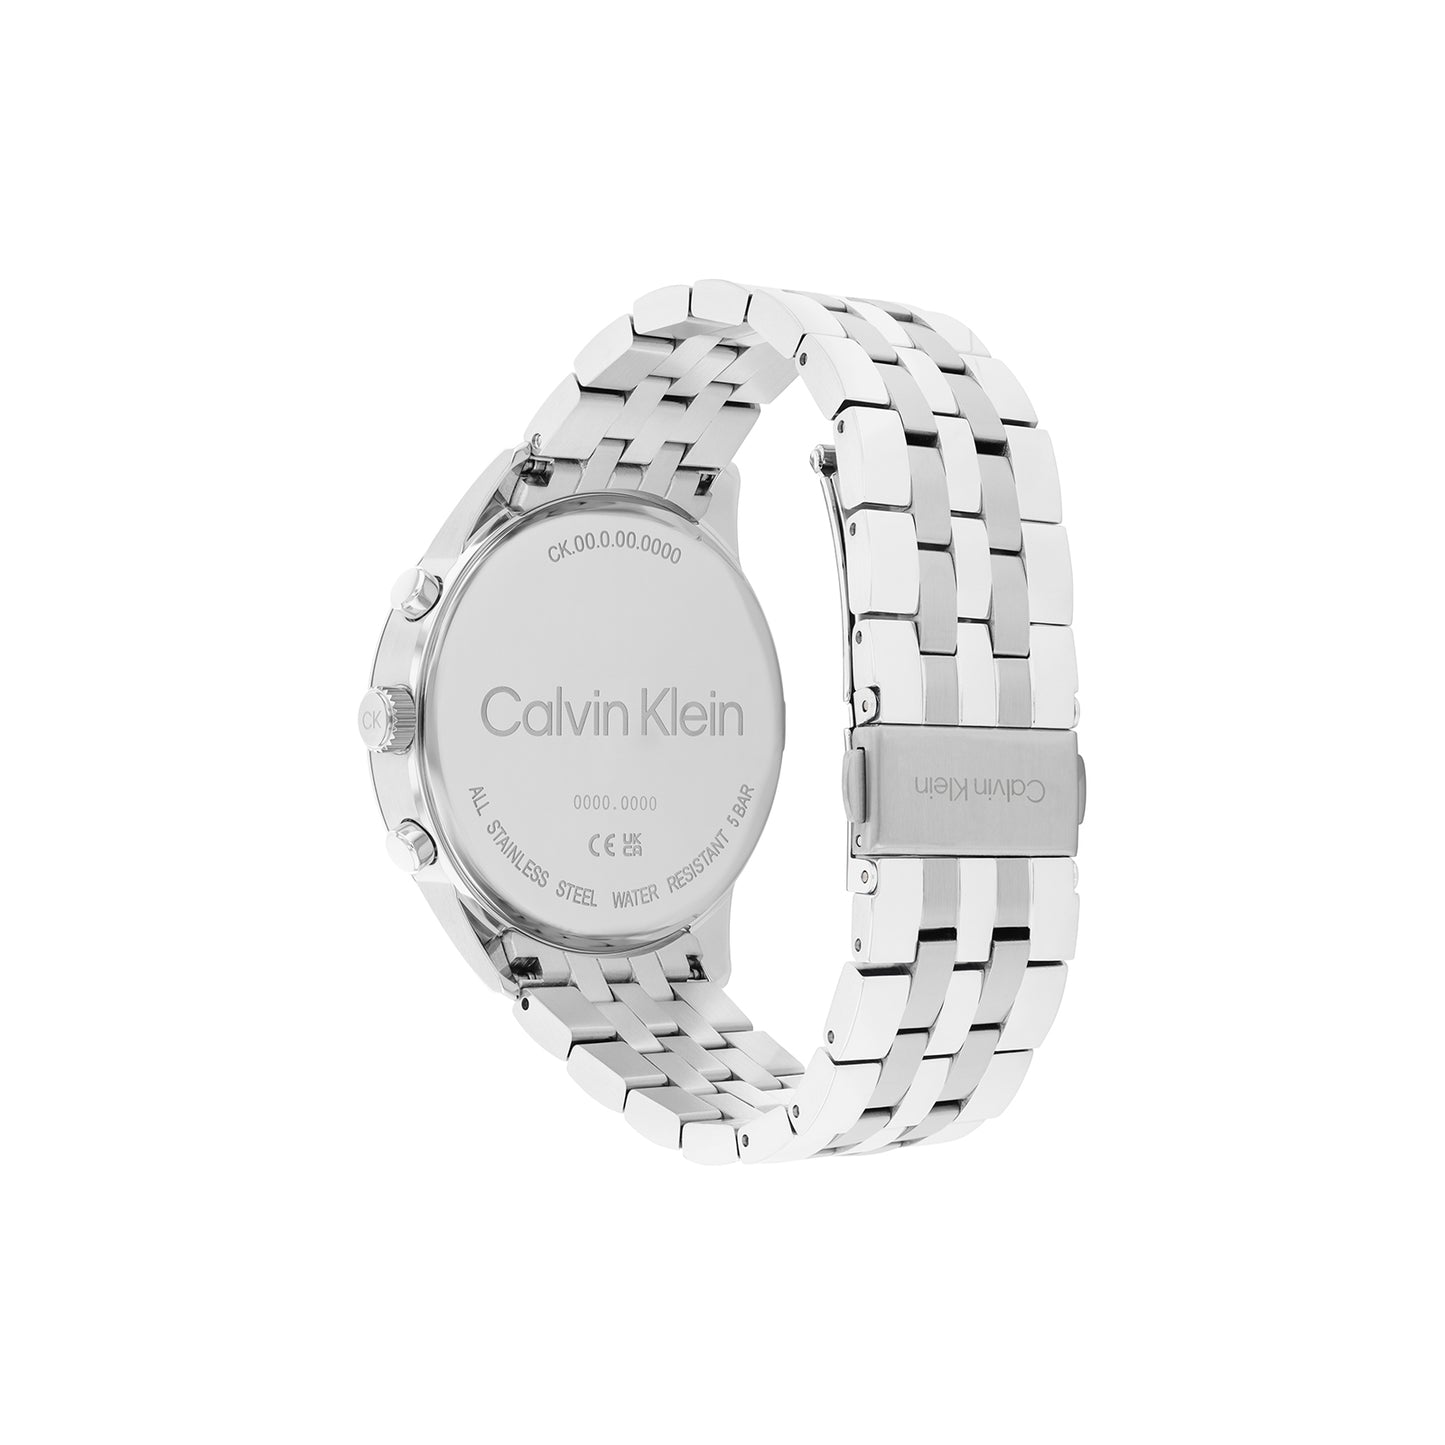 Calvin Klein 25200377 Men's Steel Watch